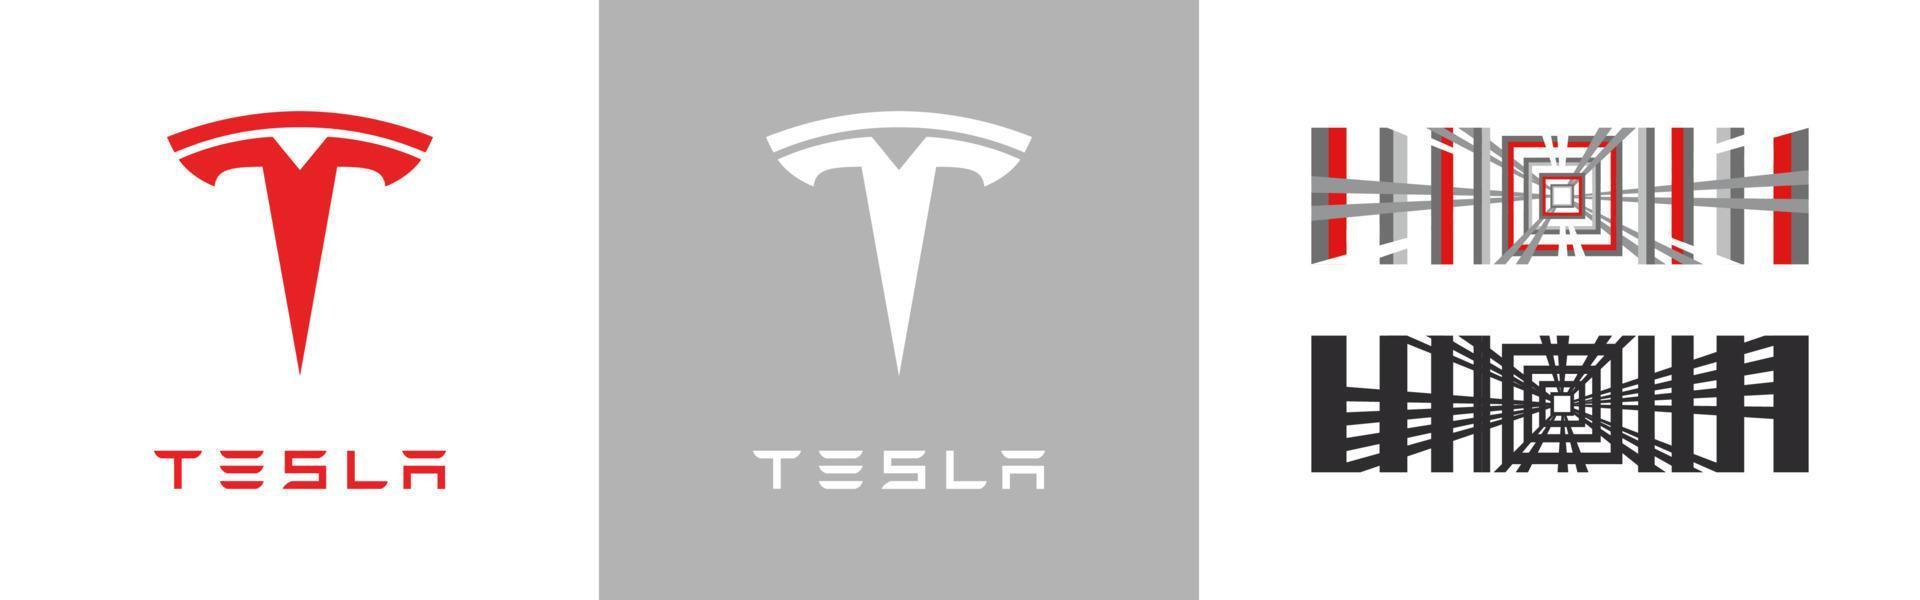 Tesla. tesla motori. moderno logo. eps 10 vettore. editoriale uso solo. vinizia, Ucraina. gennaio 10, 2023 vettore